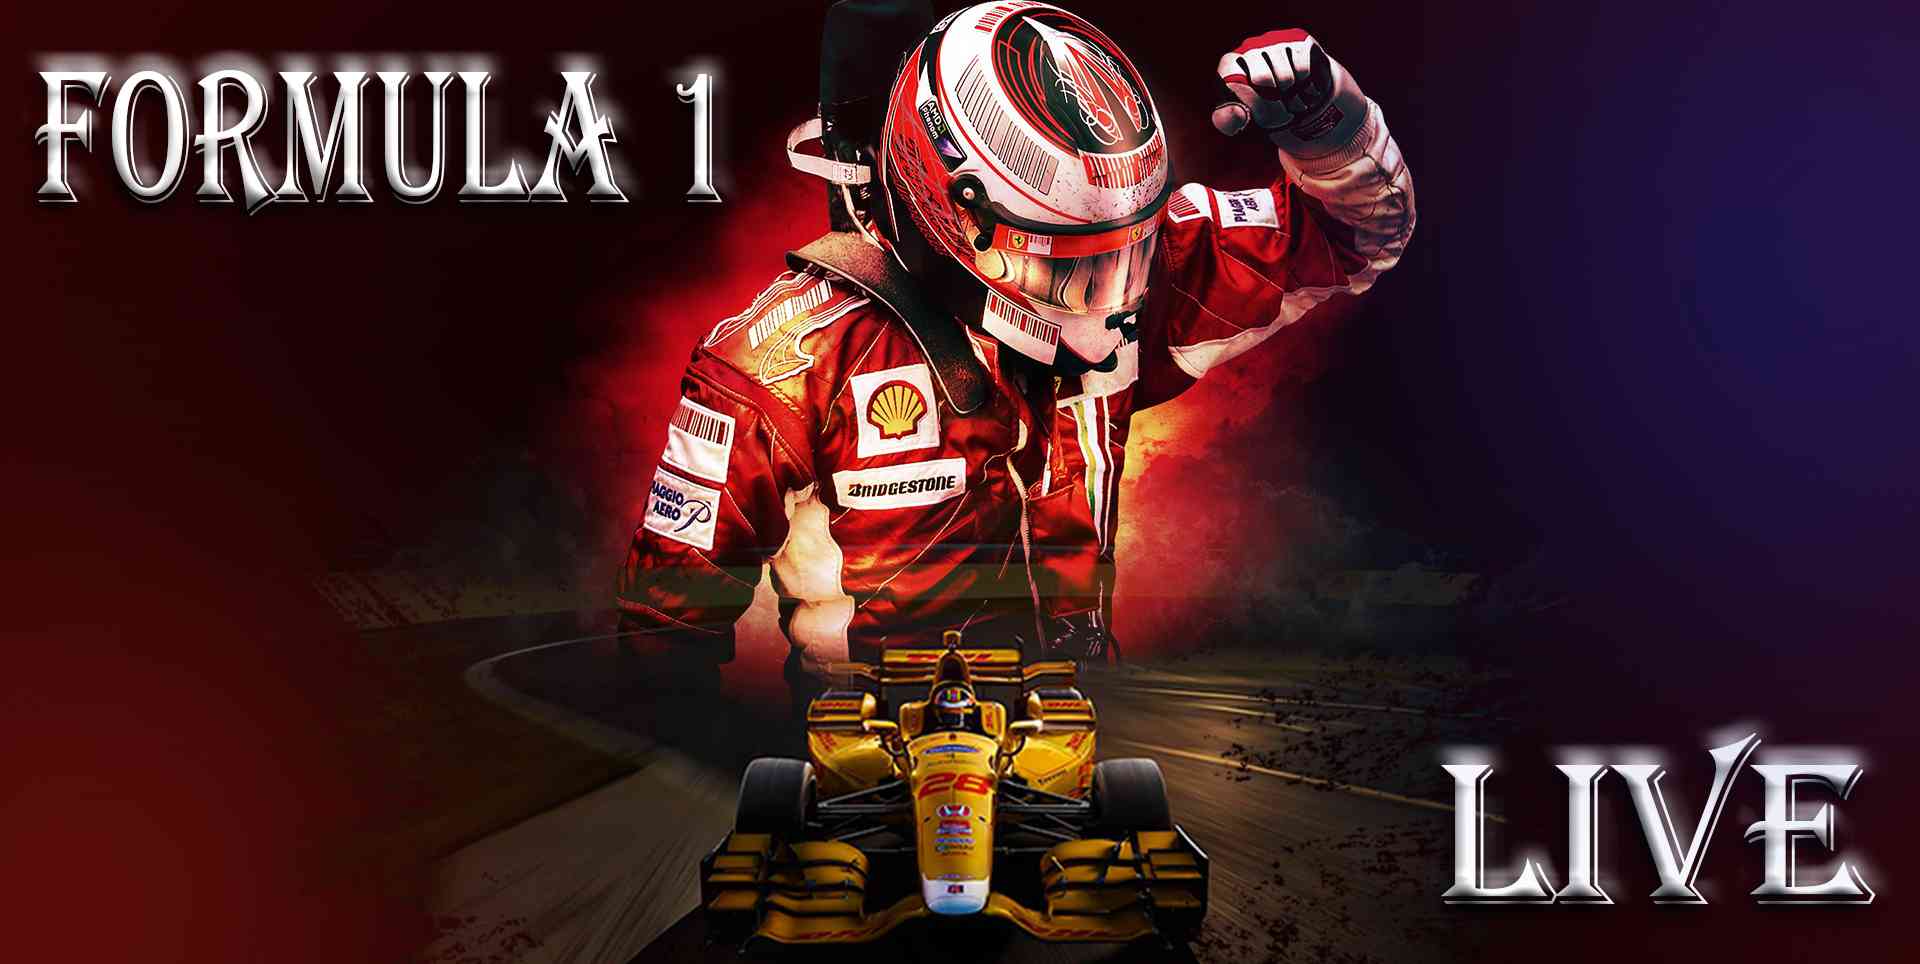 Monaco Grand Prix 2023 Live Stream Schedule Full Race Replay